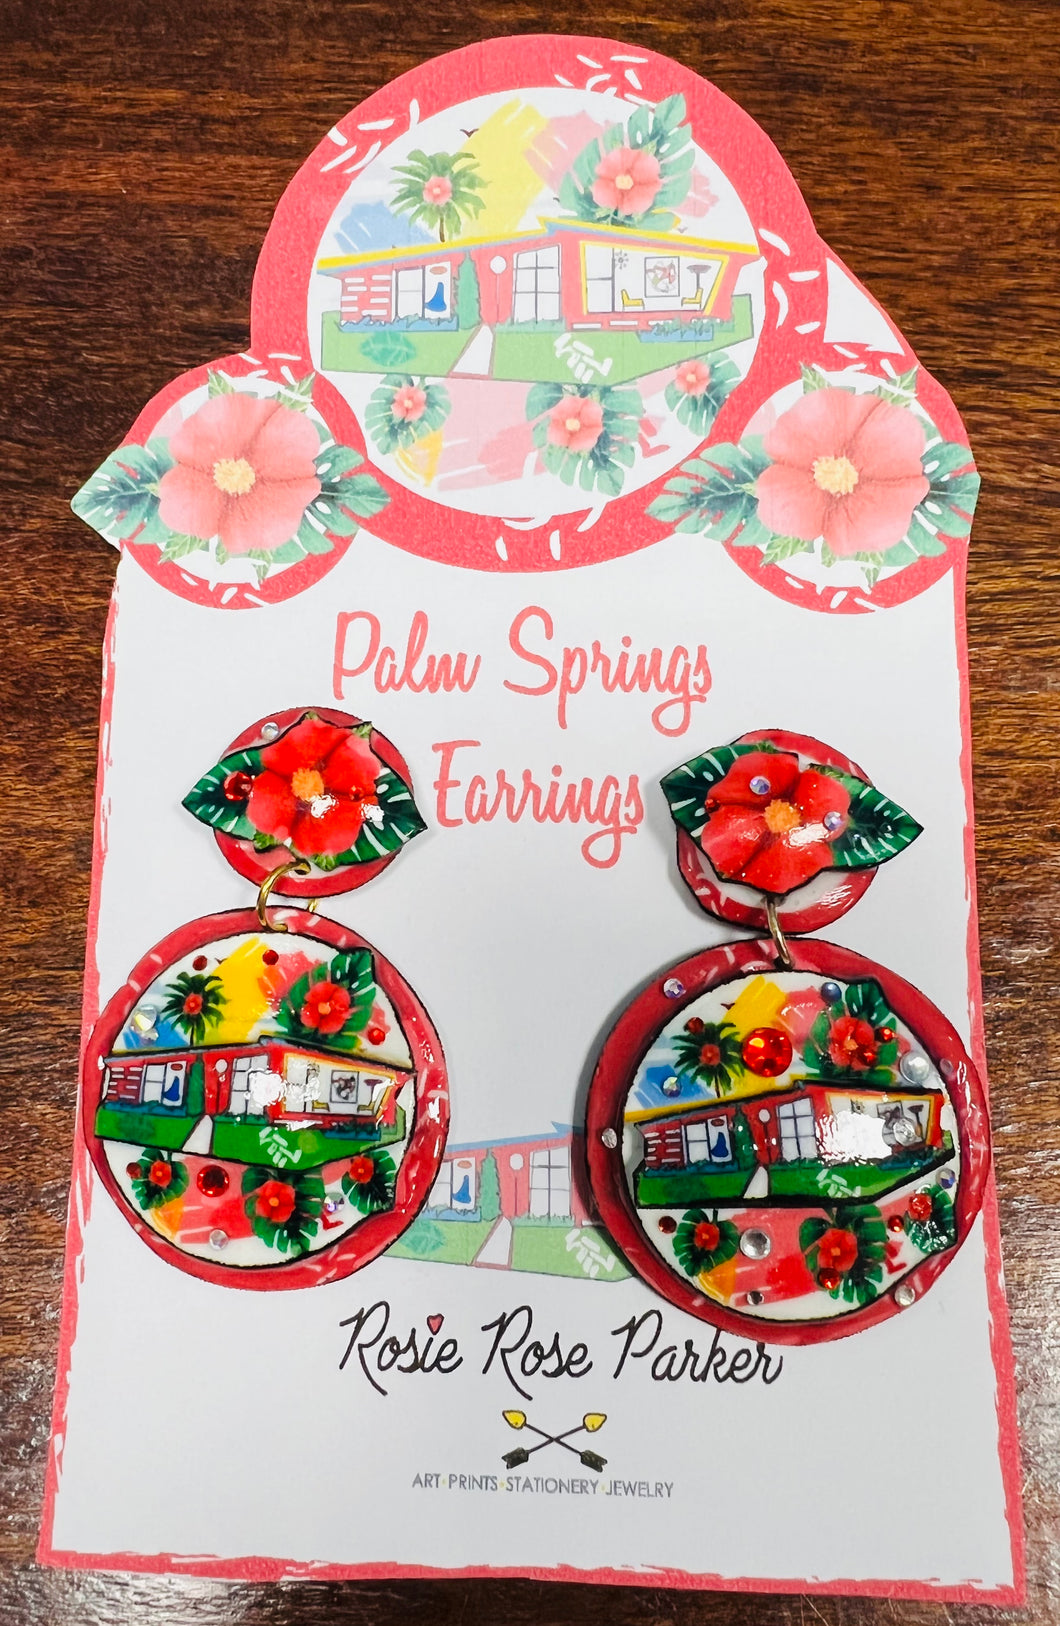 Clustlysau Palm Springs Kitsch / Kitsch Palm Springs earrings